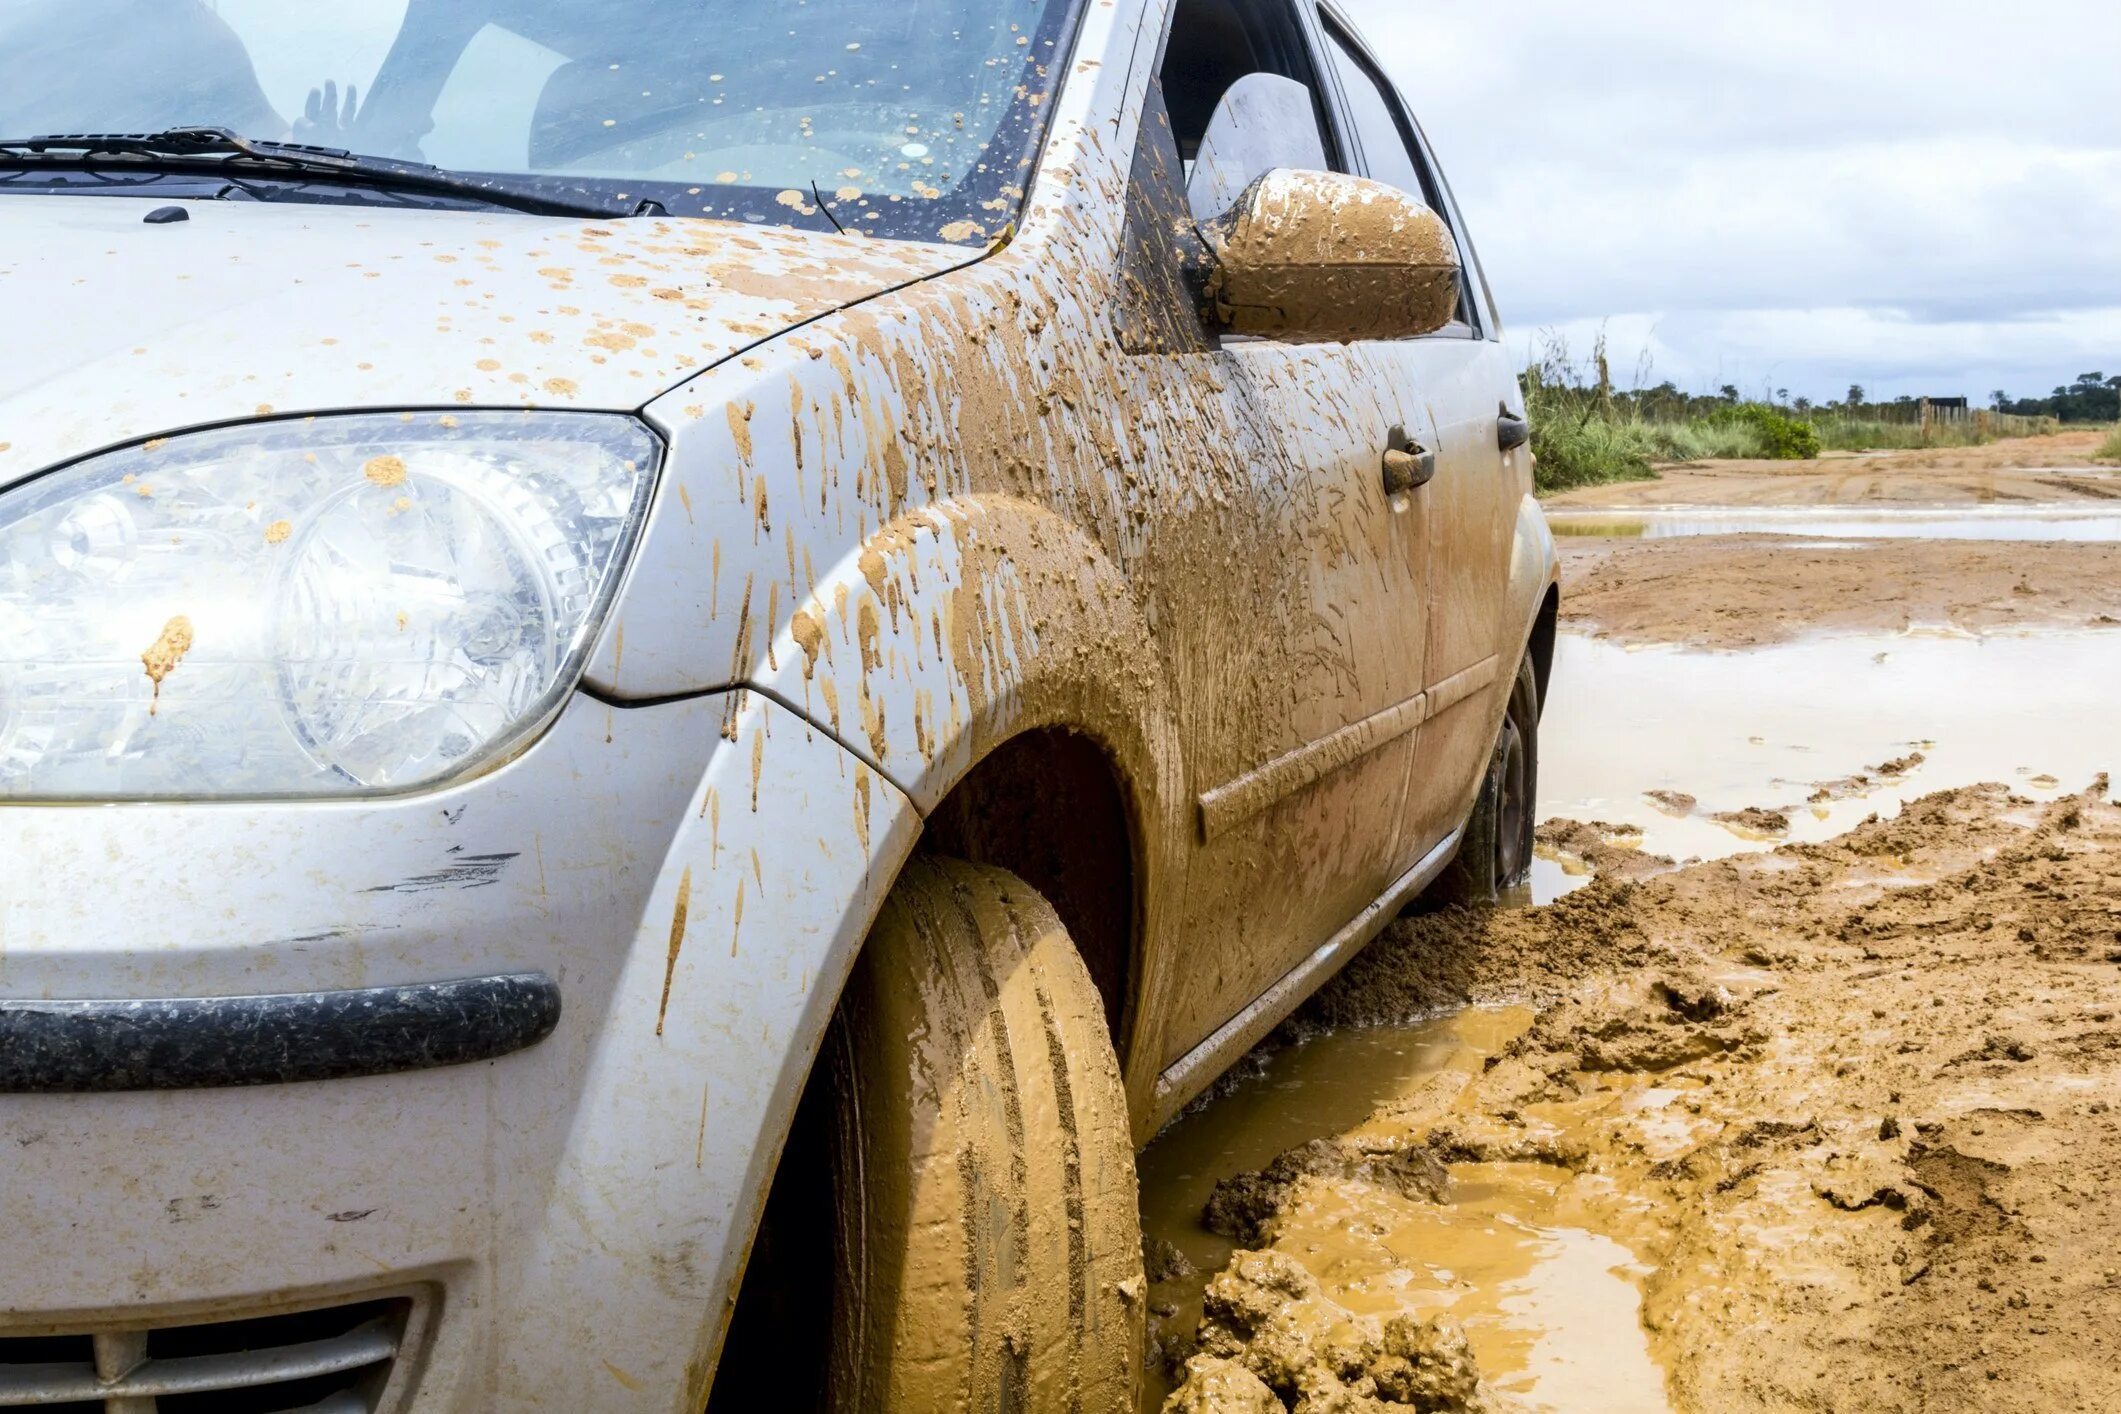 Почему машина грязная. Грязная машина. Машина застряла в грязи. Автомобиль застрял в грязи. Грязная машина в грязи.